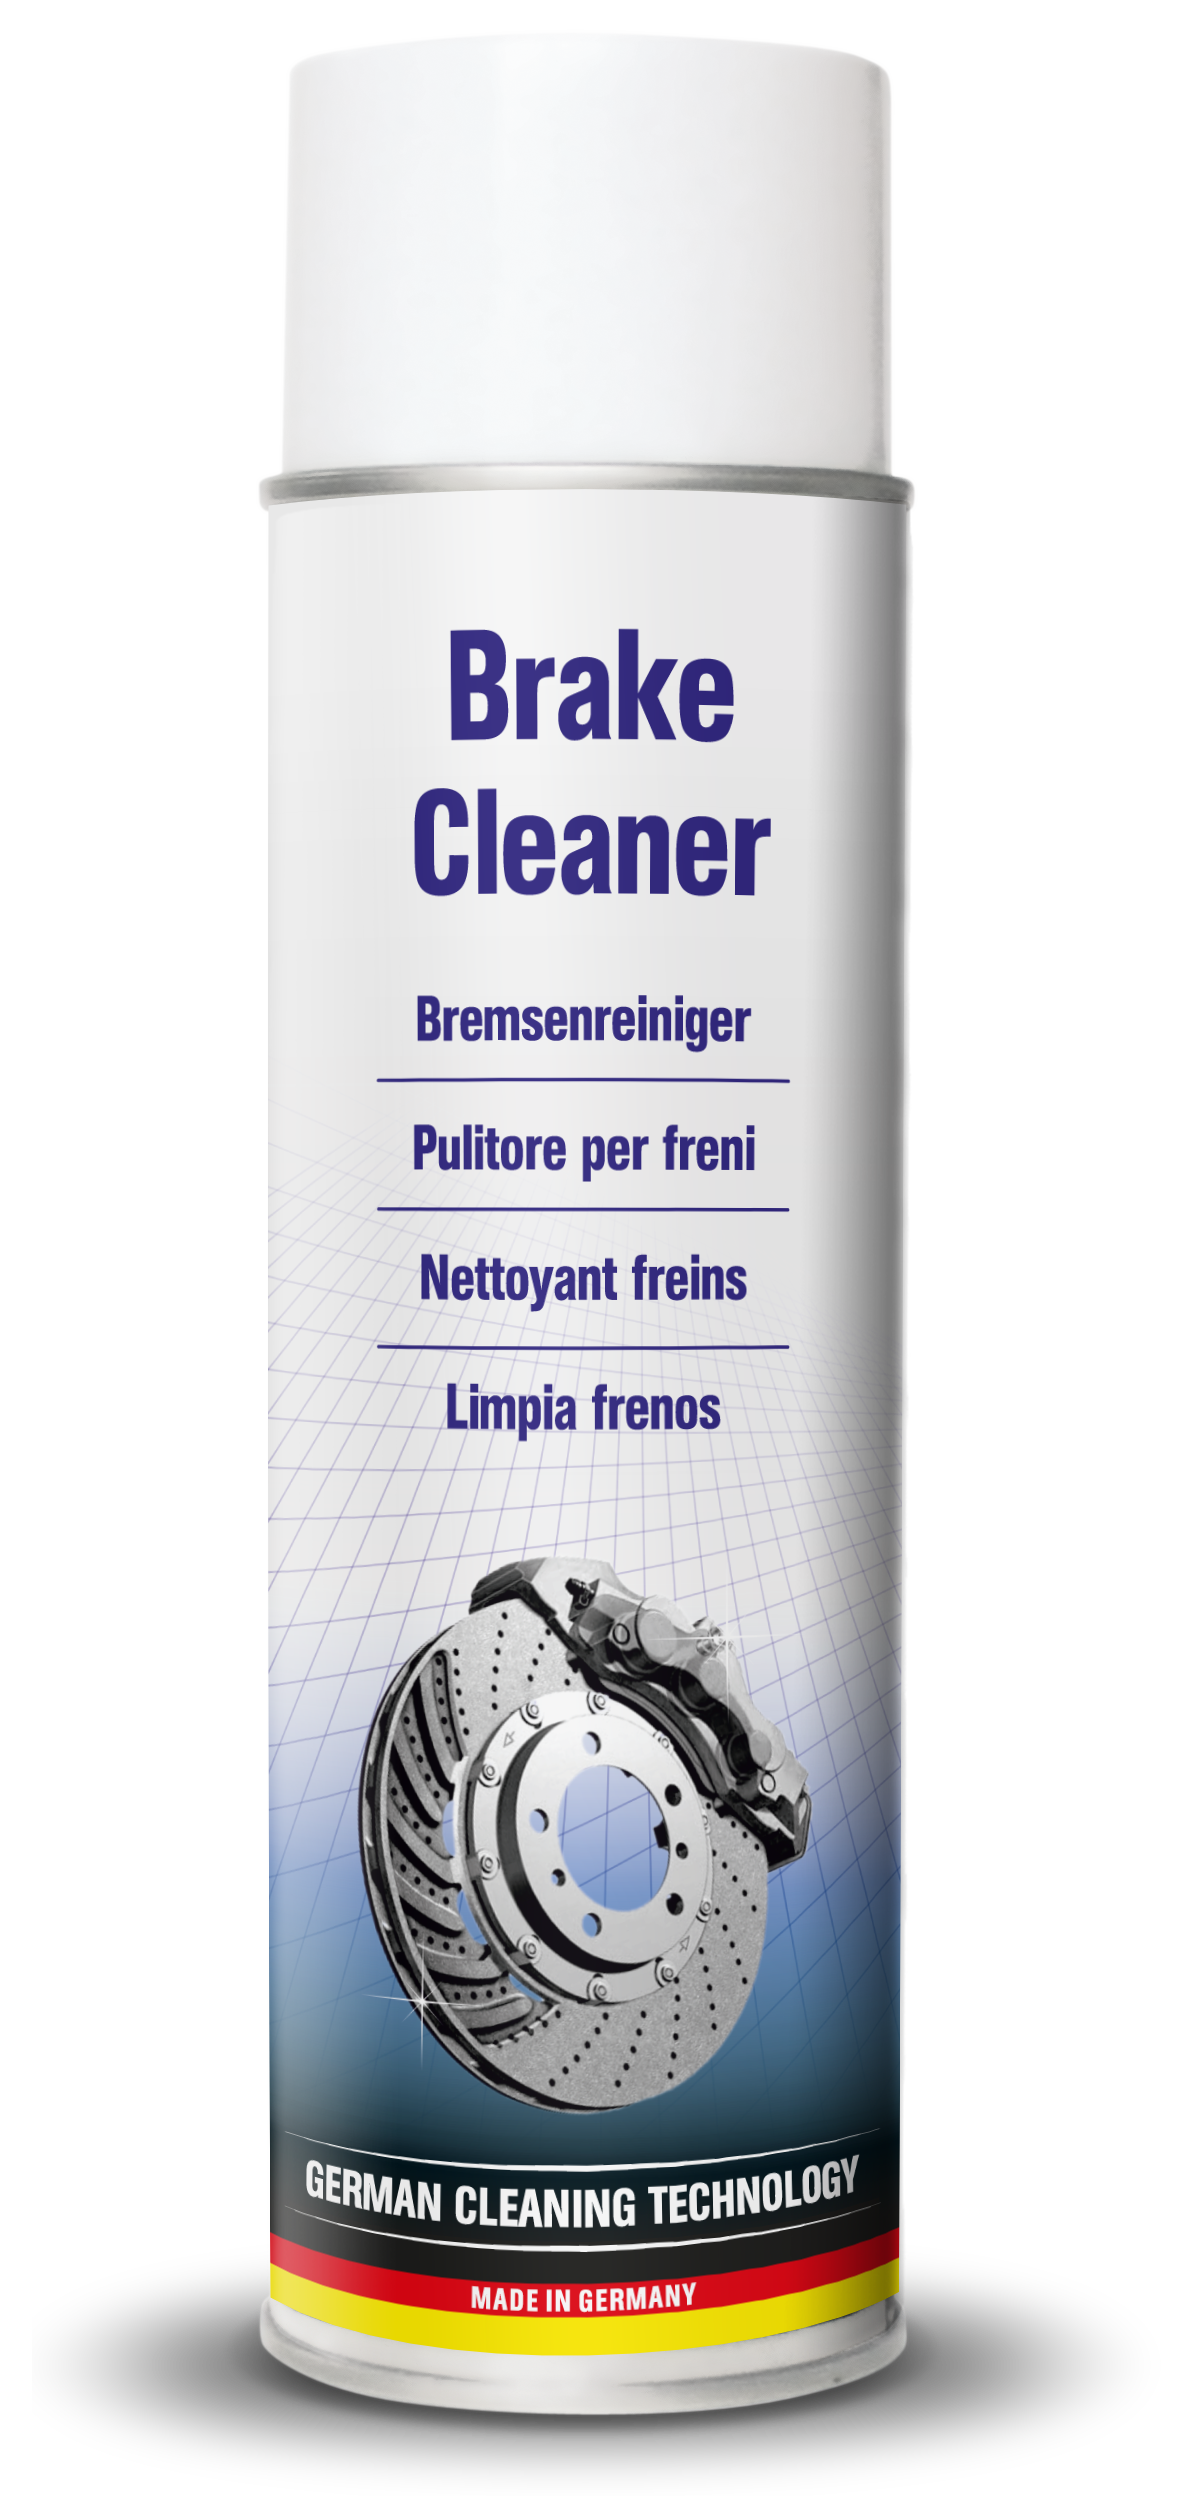 mac,s brake cleaner 4800